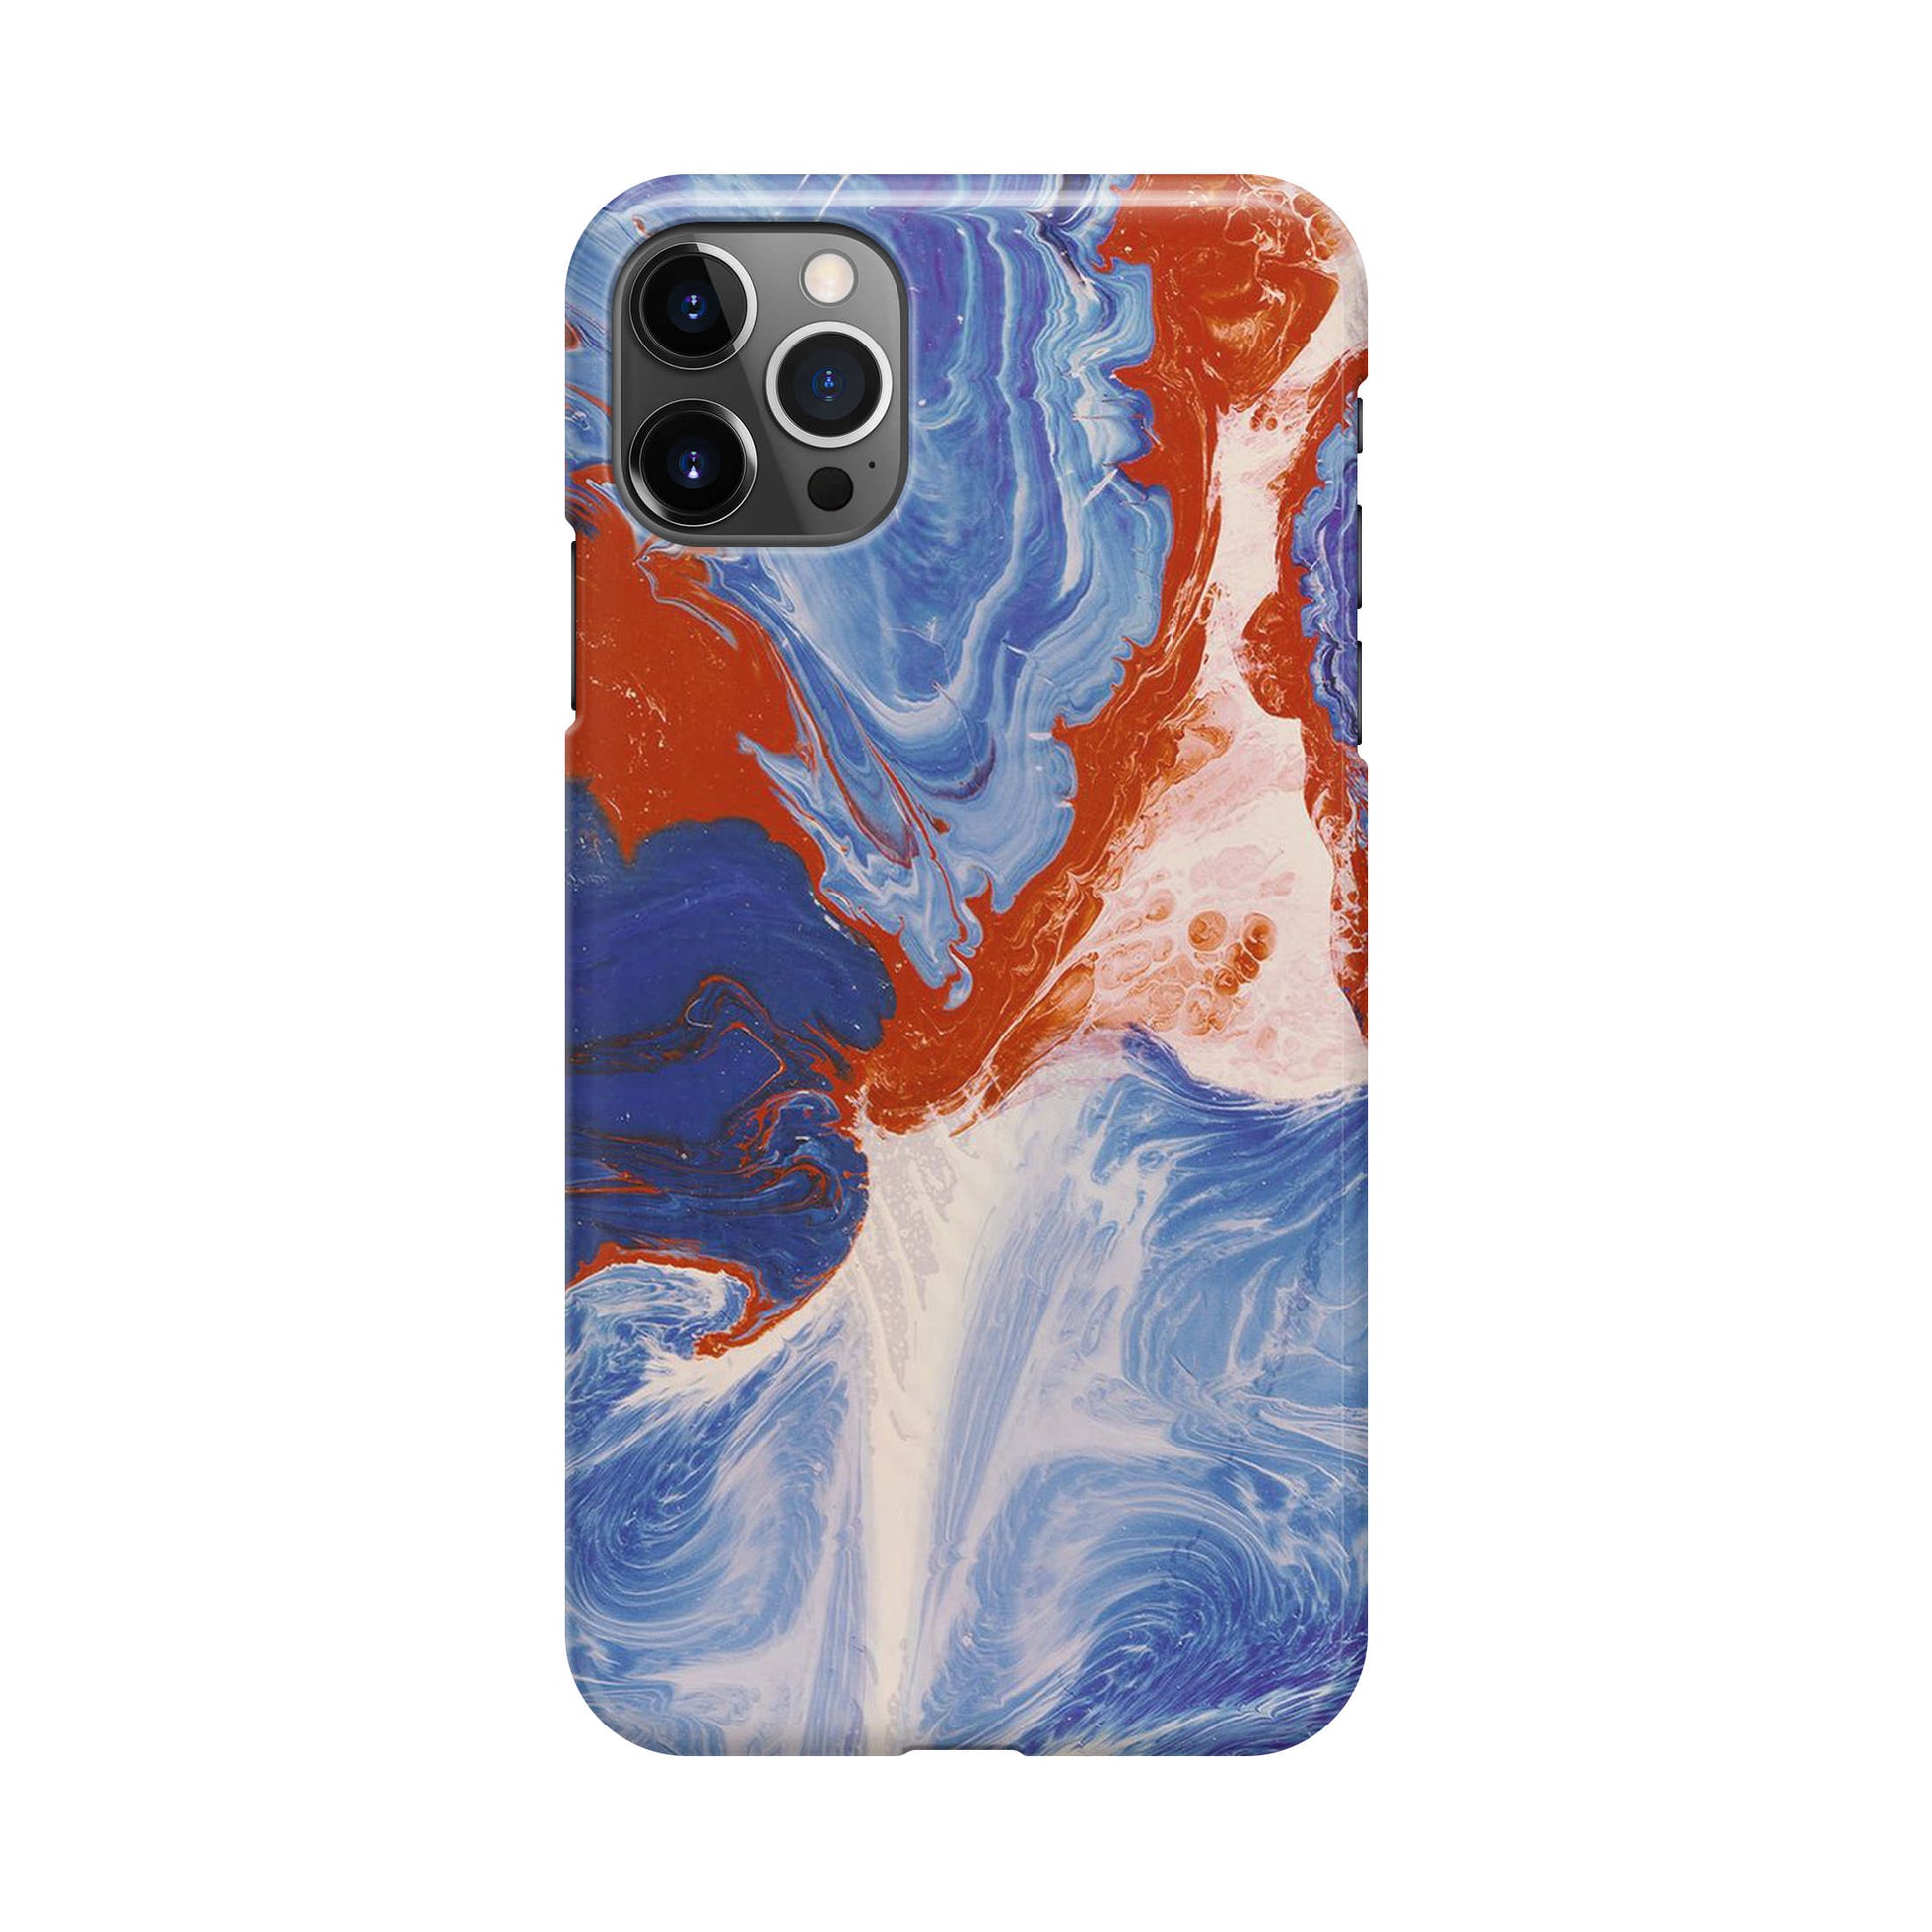 Mixed Paint Art iPhone 12 Pro Max Case